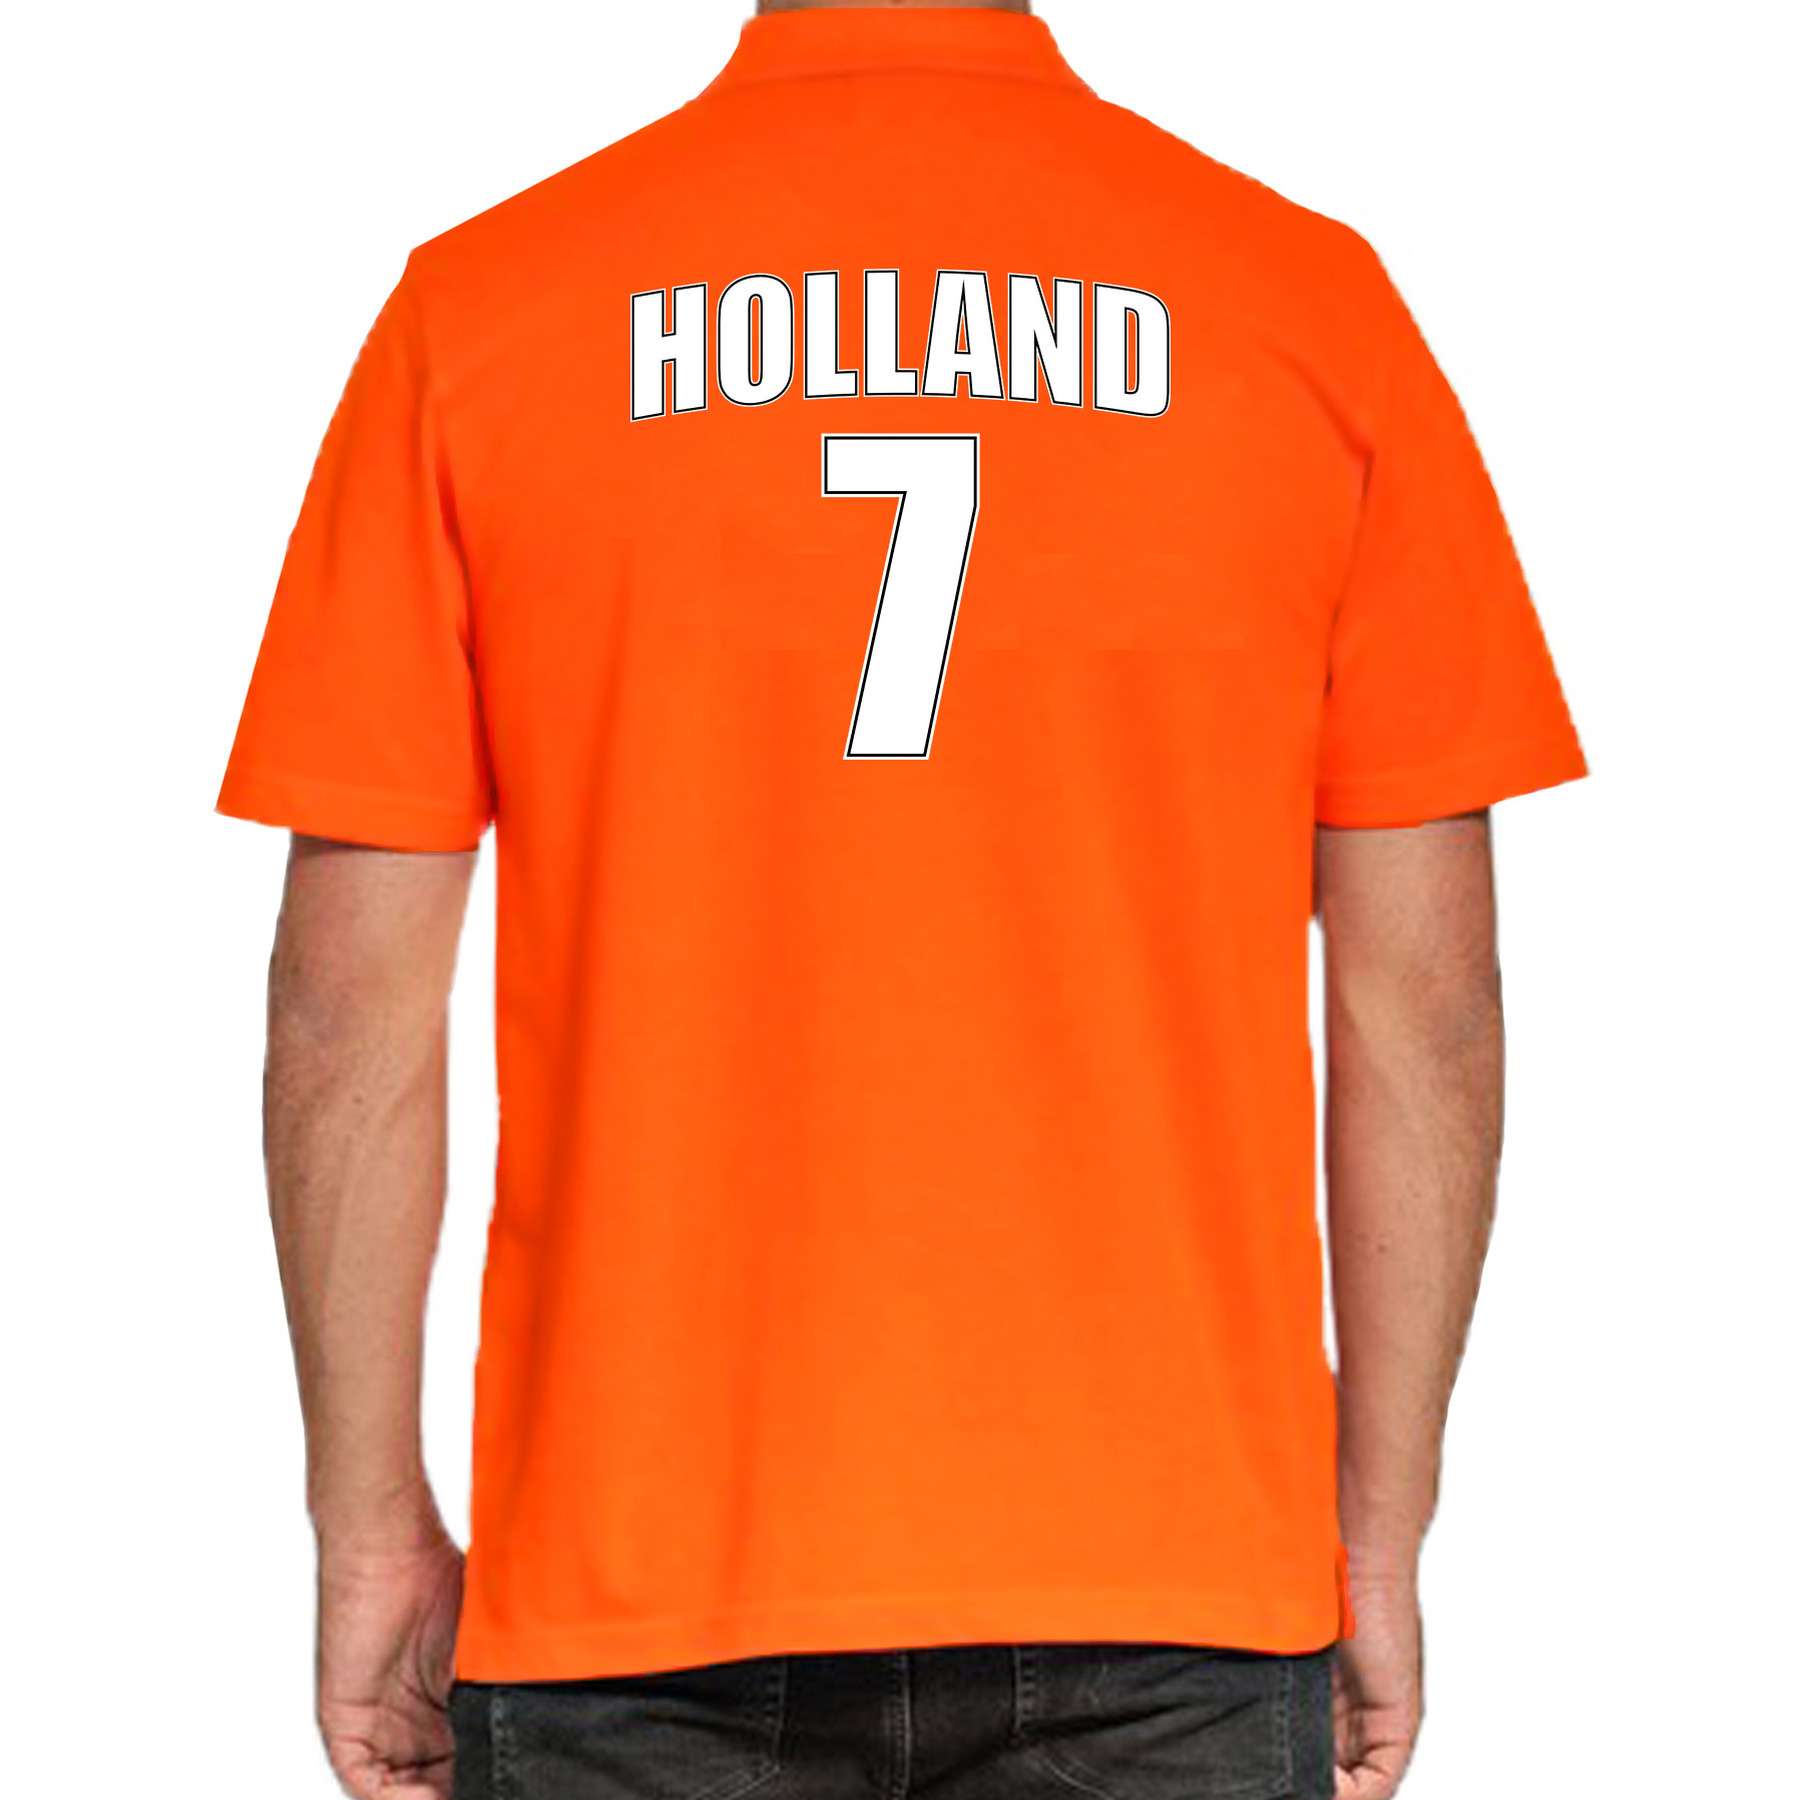 Oranje supporter poloshirt met rugnummer 7 - Holland - Nederland fan shirt voor heren